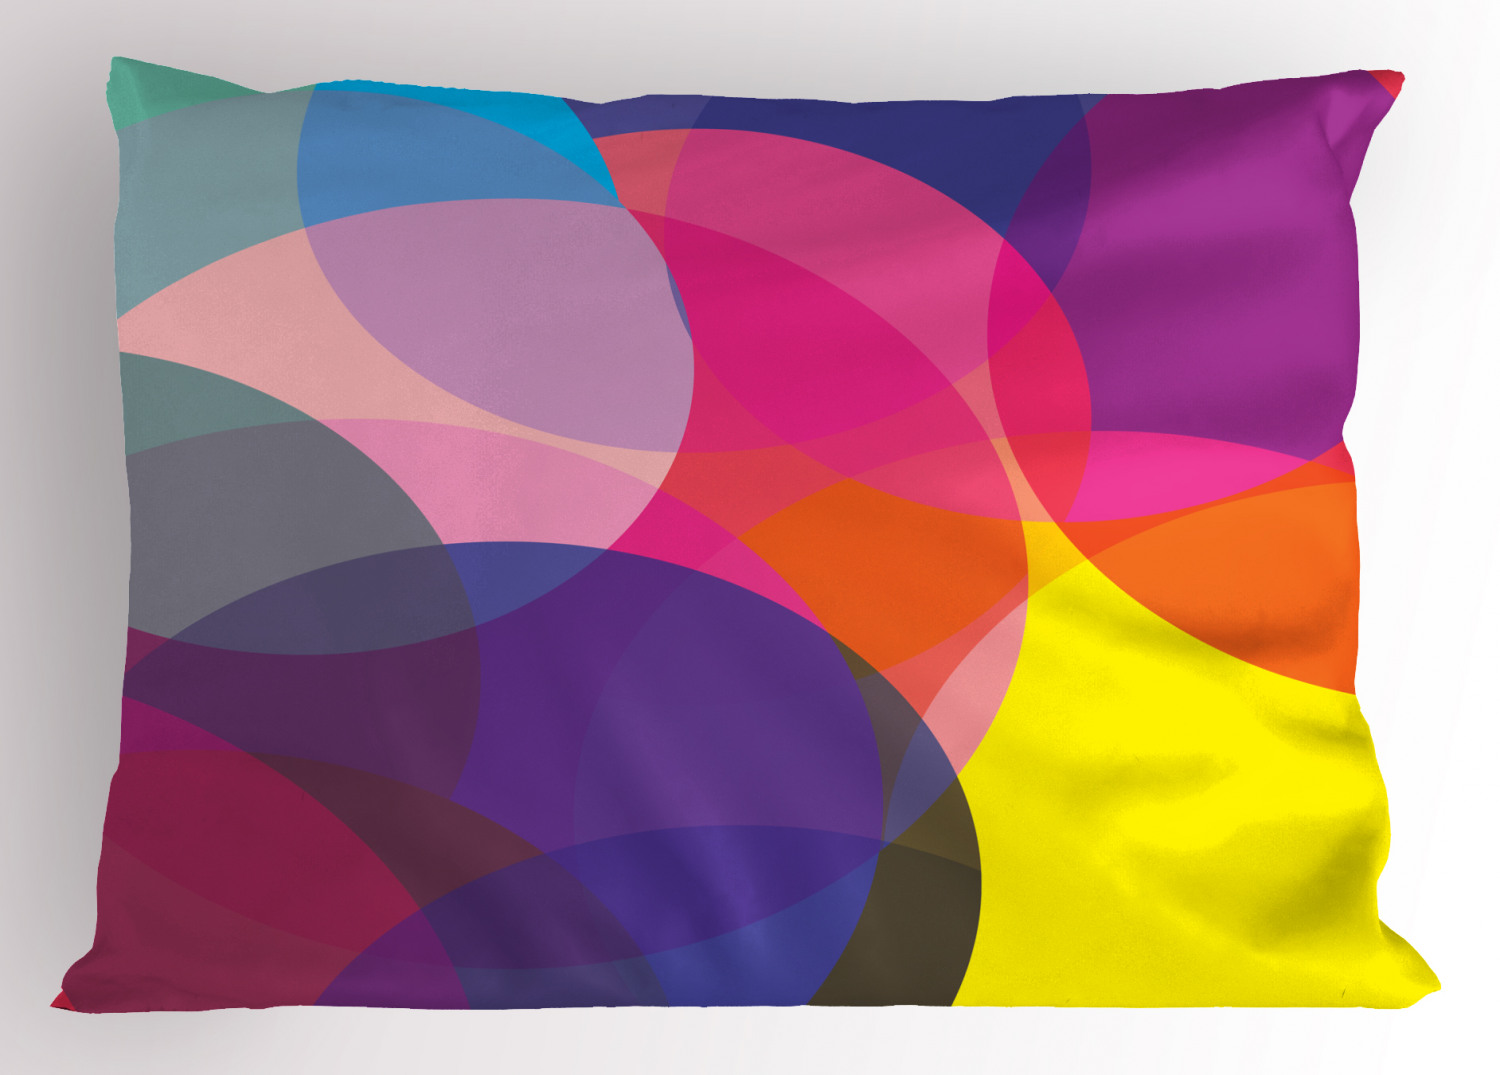 Details about   Childish Pillow Sham Decorative Pillowcase 3 Sizes for Bedroom Decor 